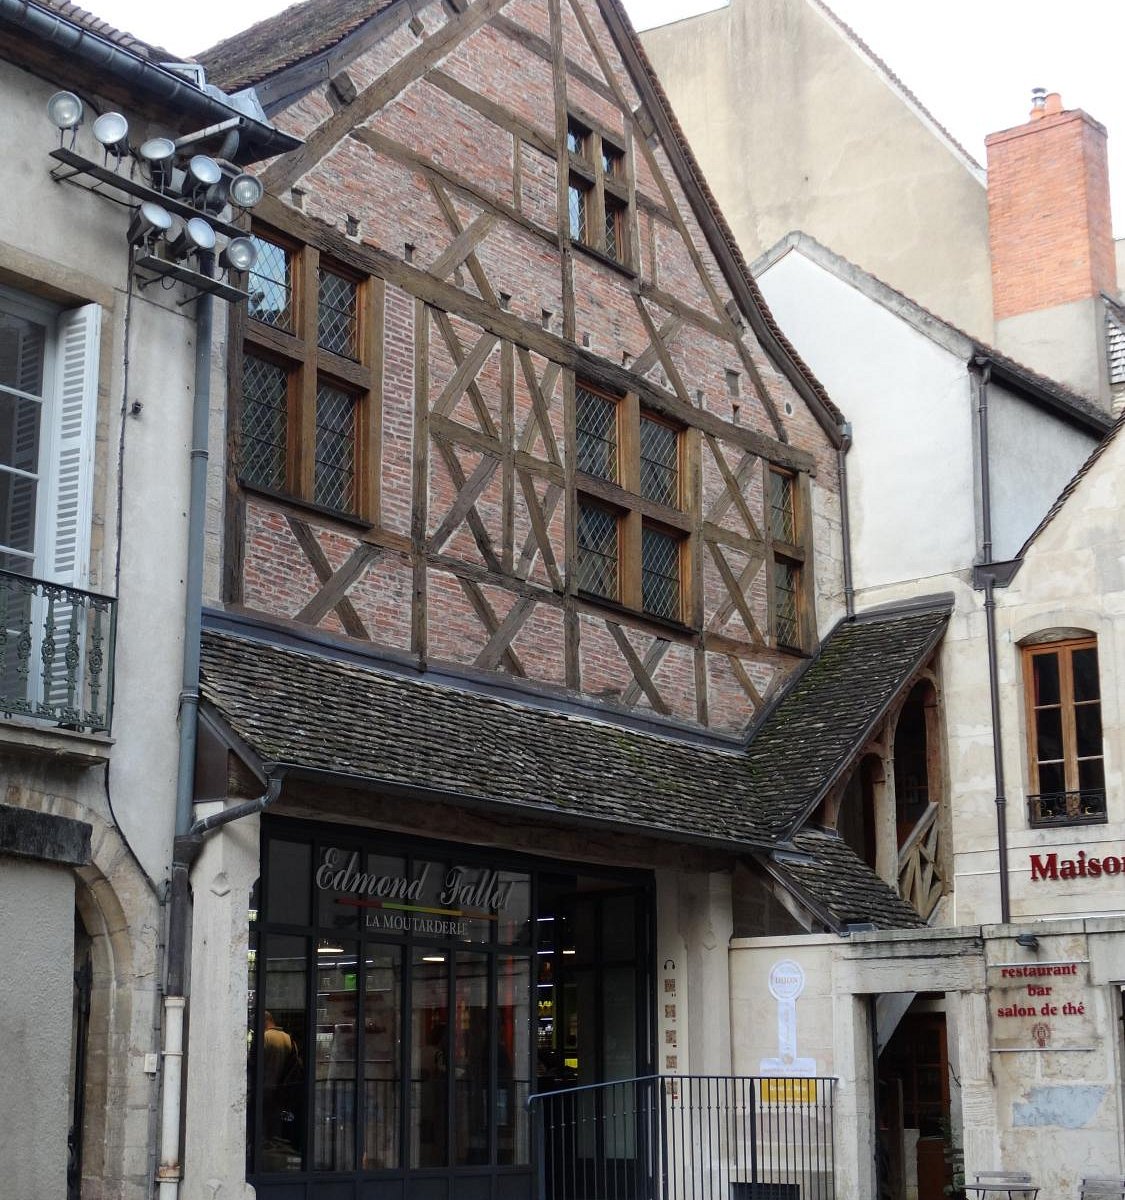 Moutarde de Dijon : fabrication, visite moutarderie, spécialité de Bourgogne